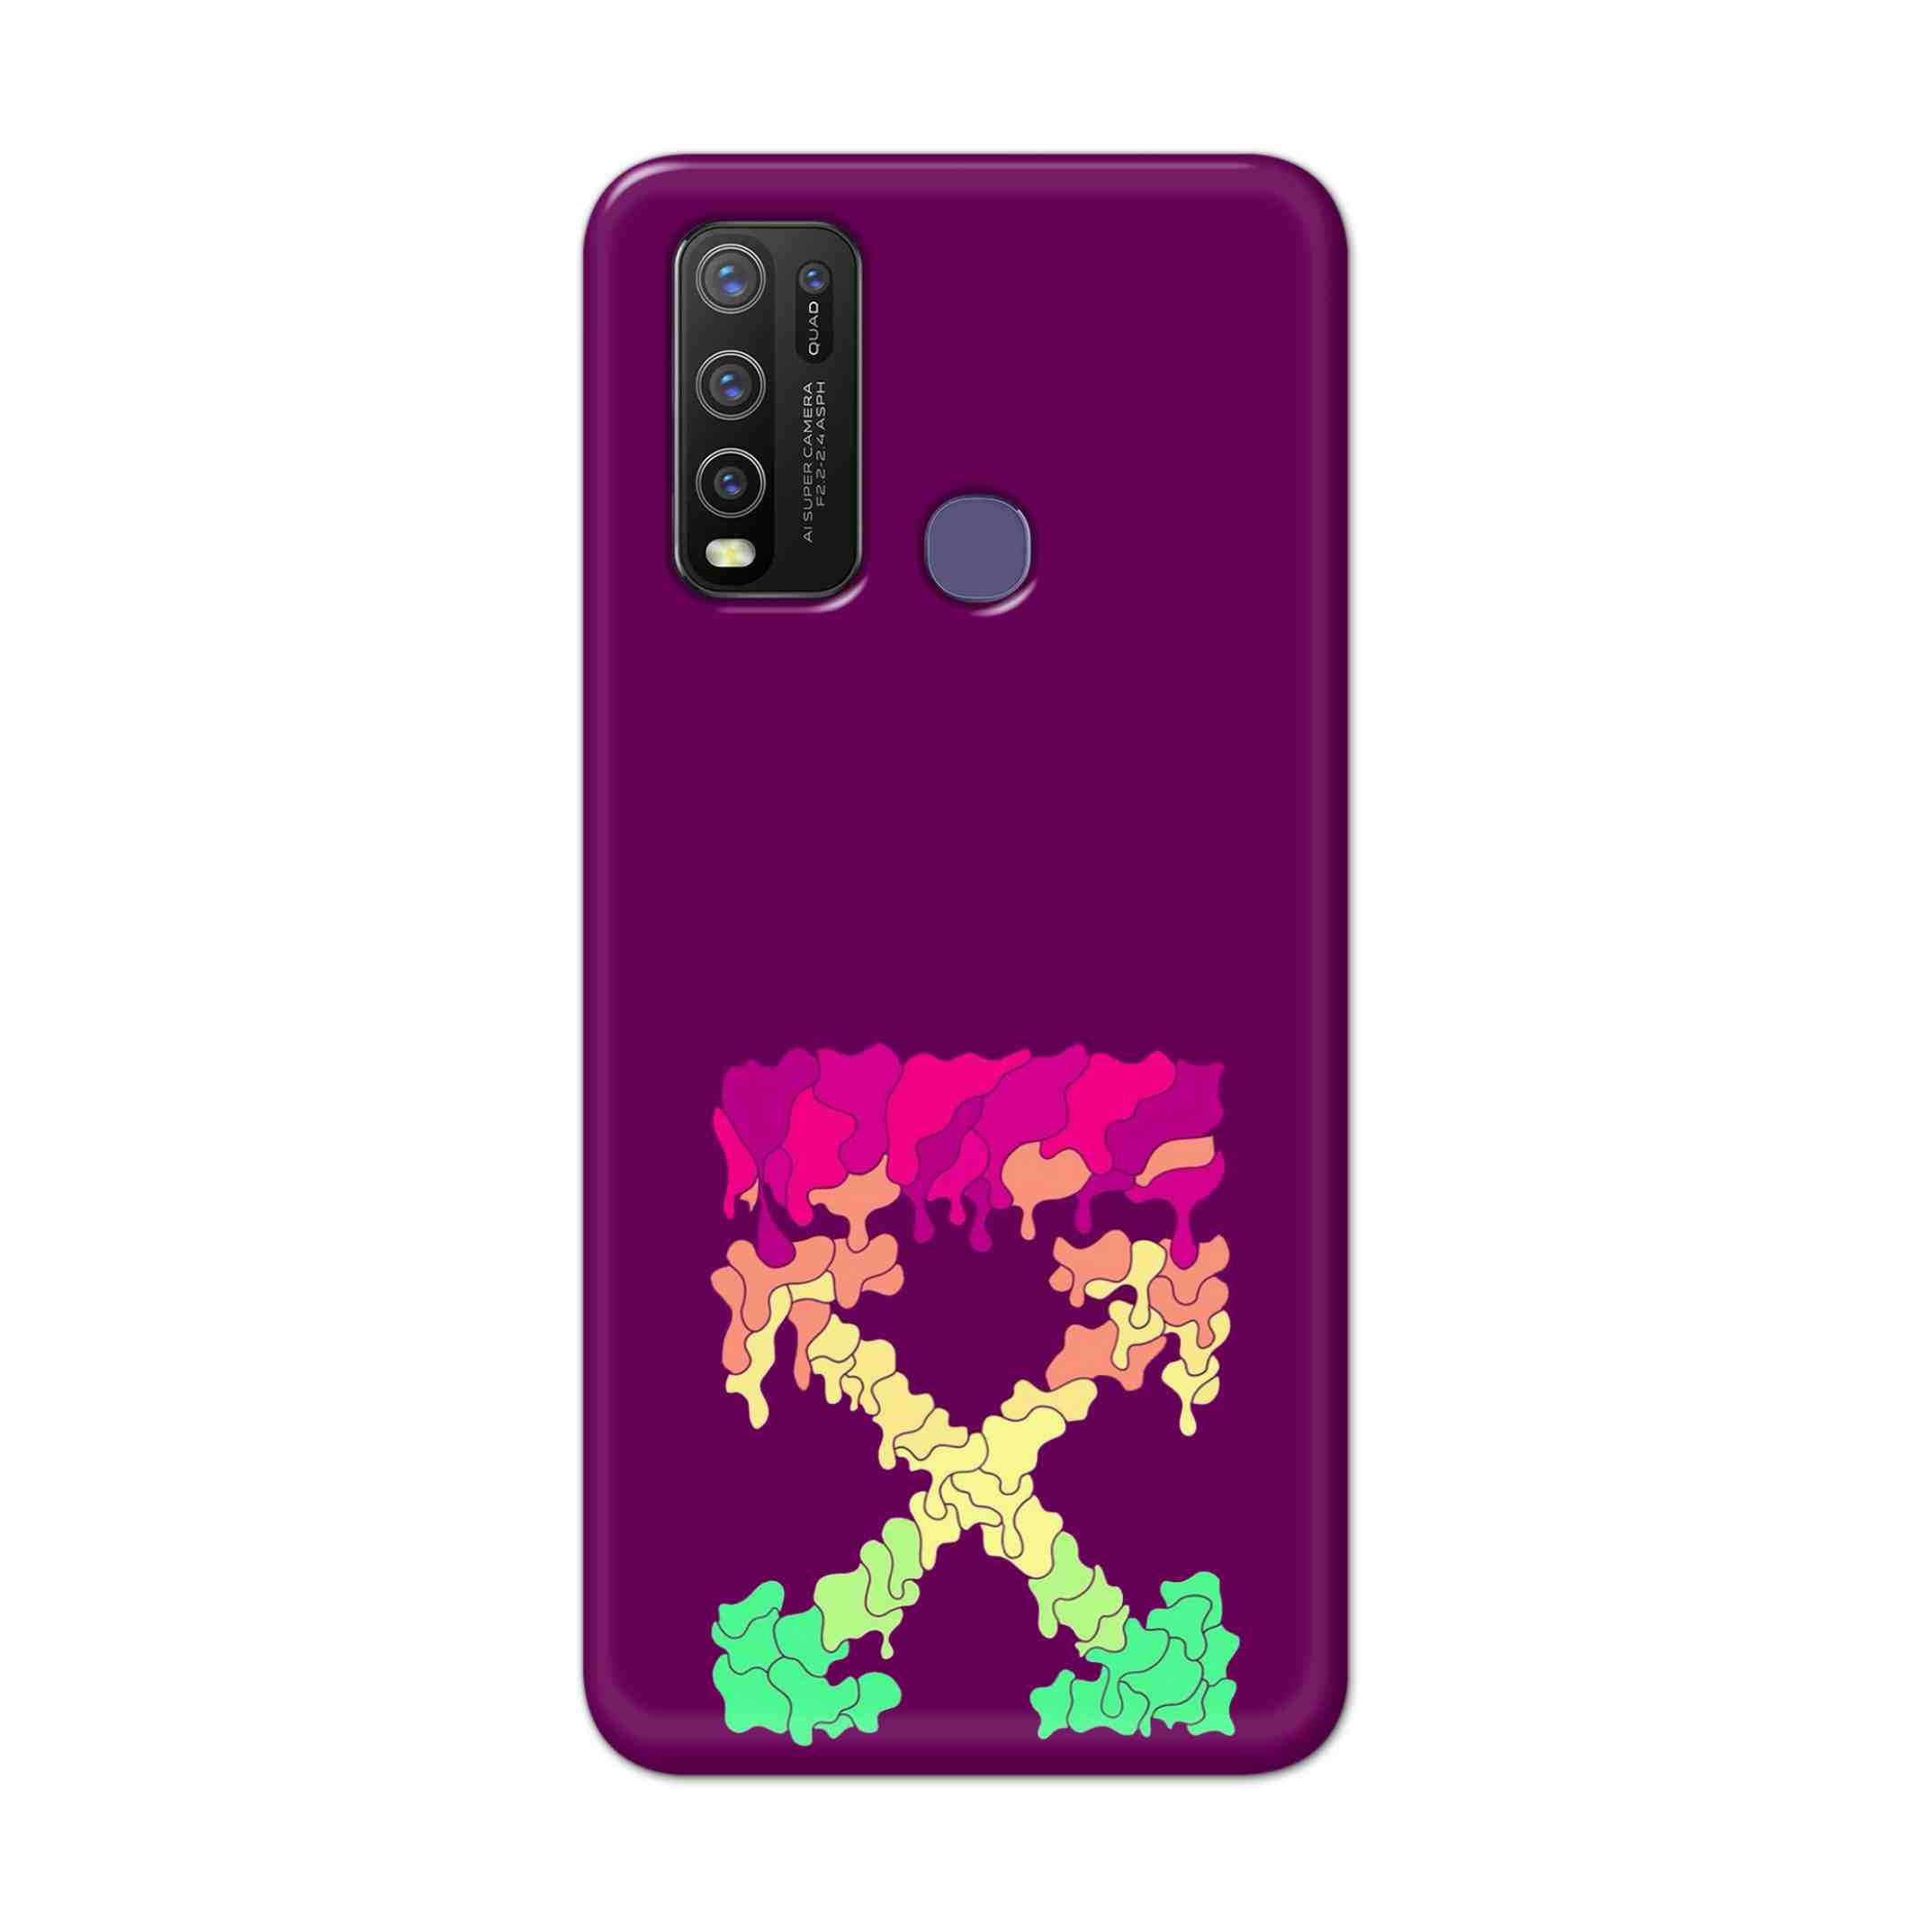 Buy X.O Hard Back Mobile Phone Case Cover For Vivo Y50 Online